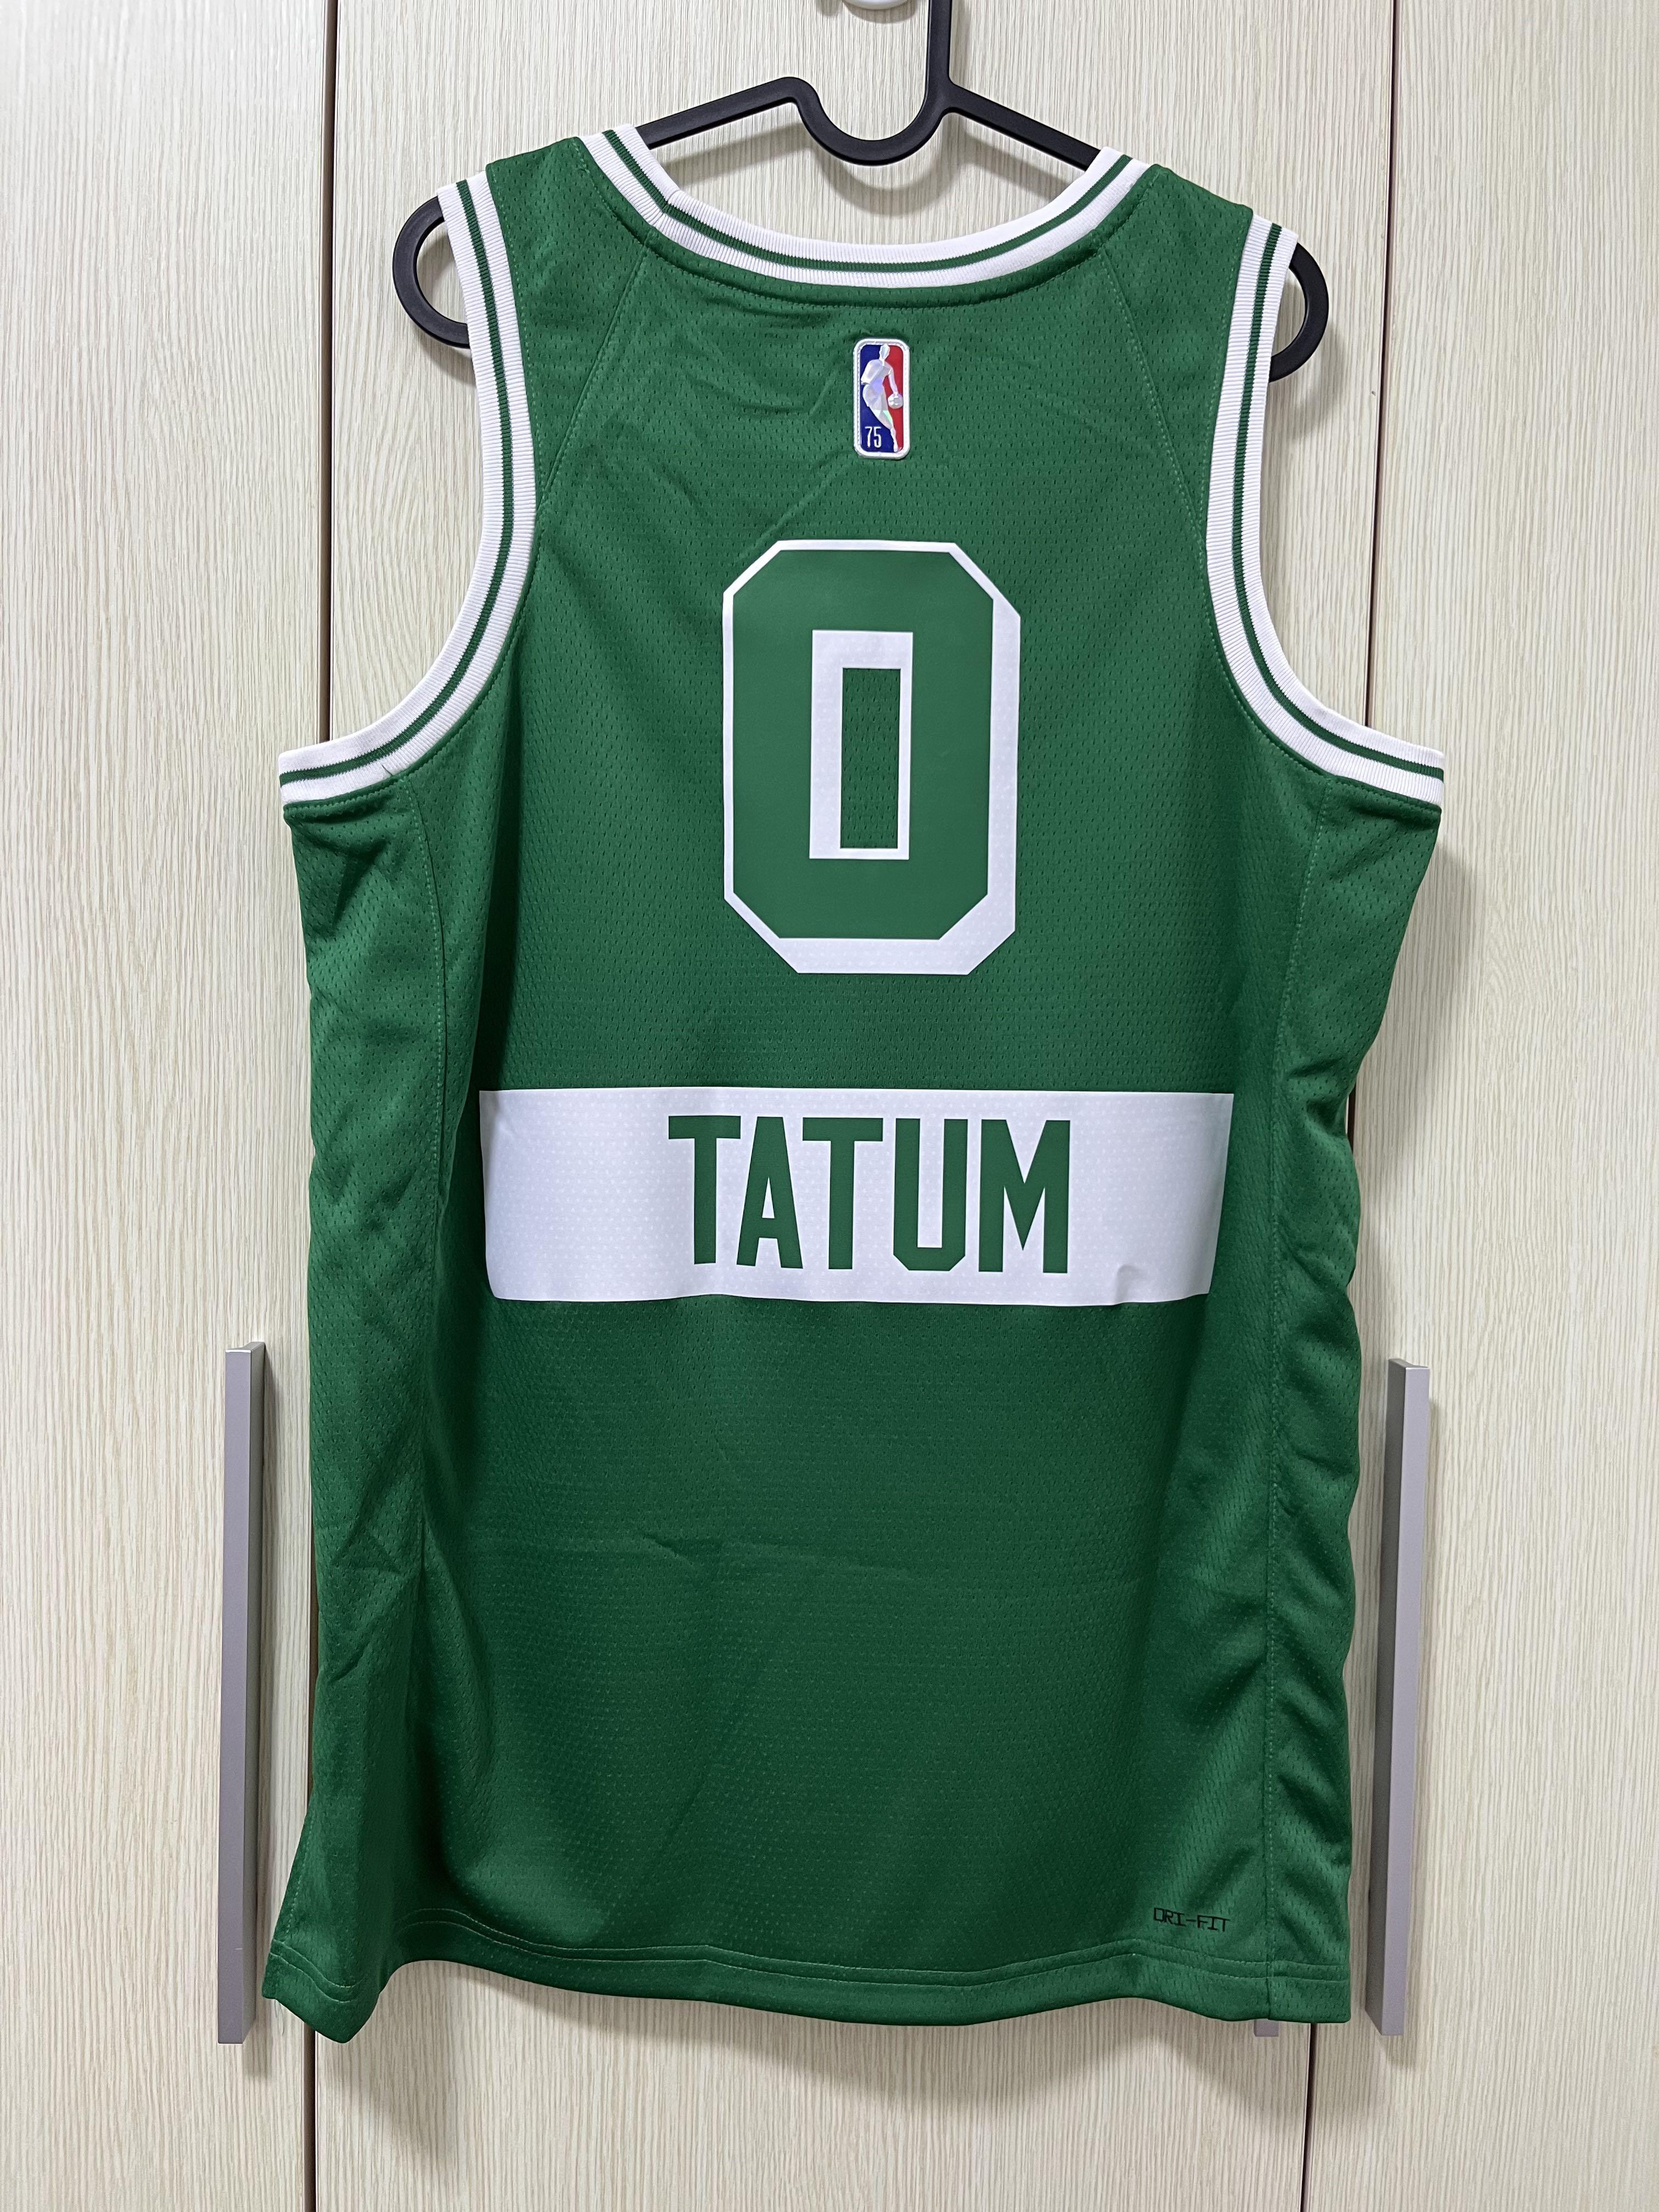 Authentic Nike Swingman Jayson Tatum 75 City Edition NBA Jersey